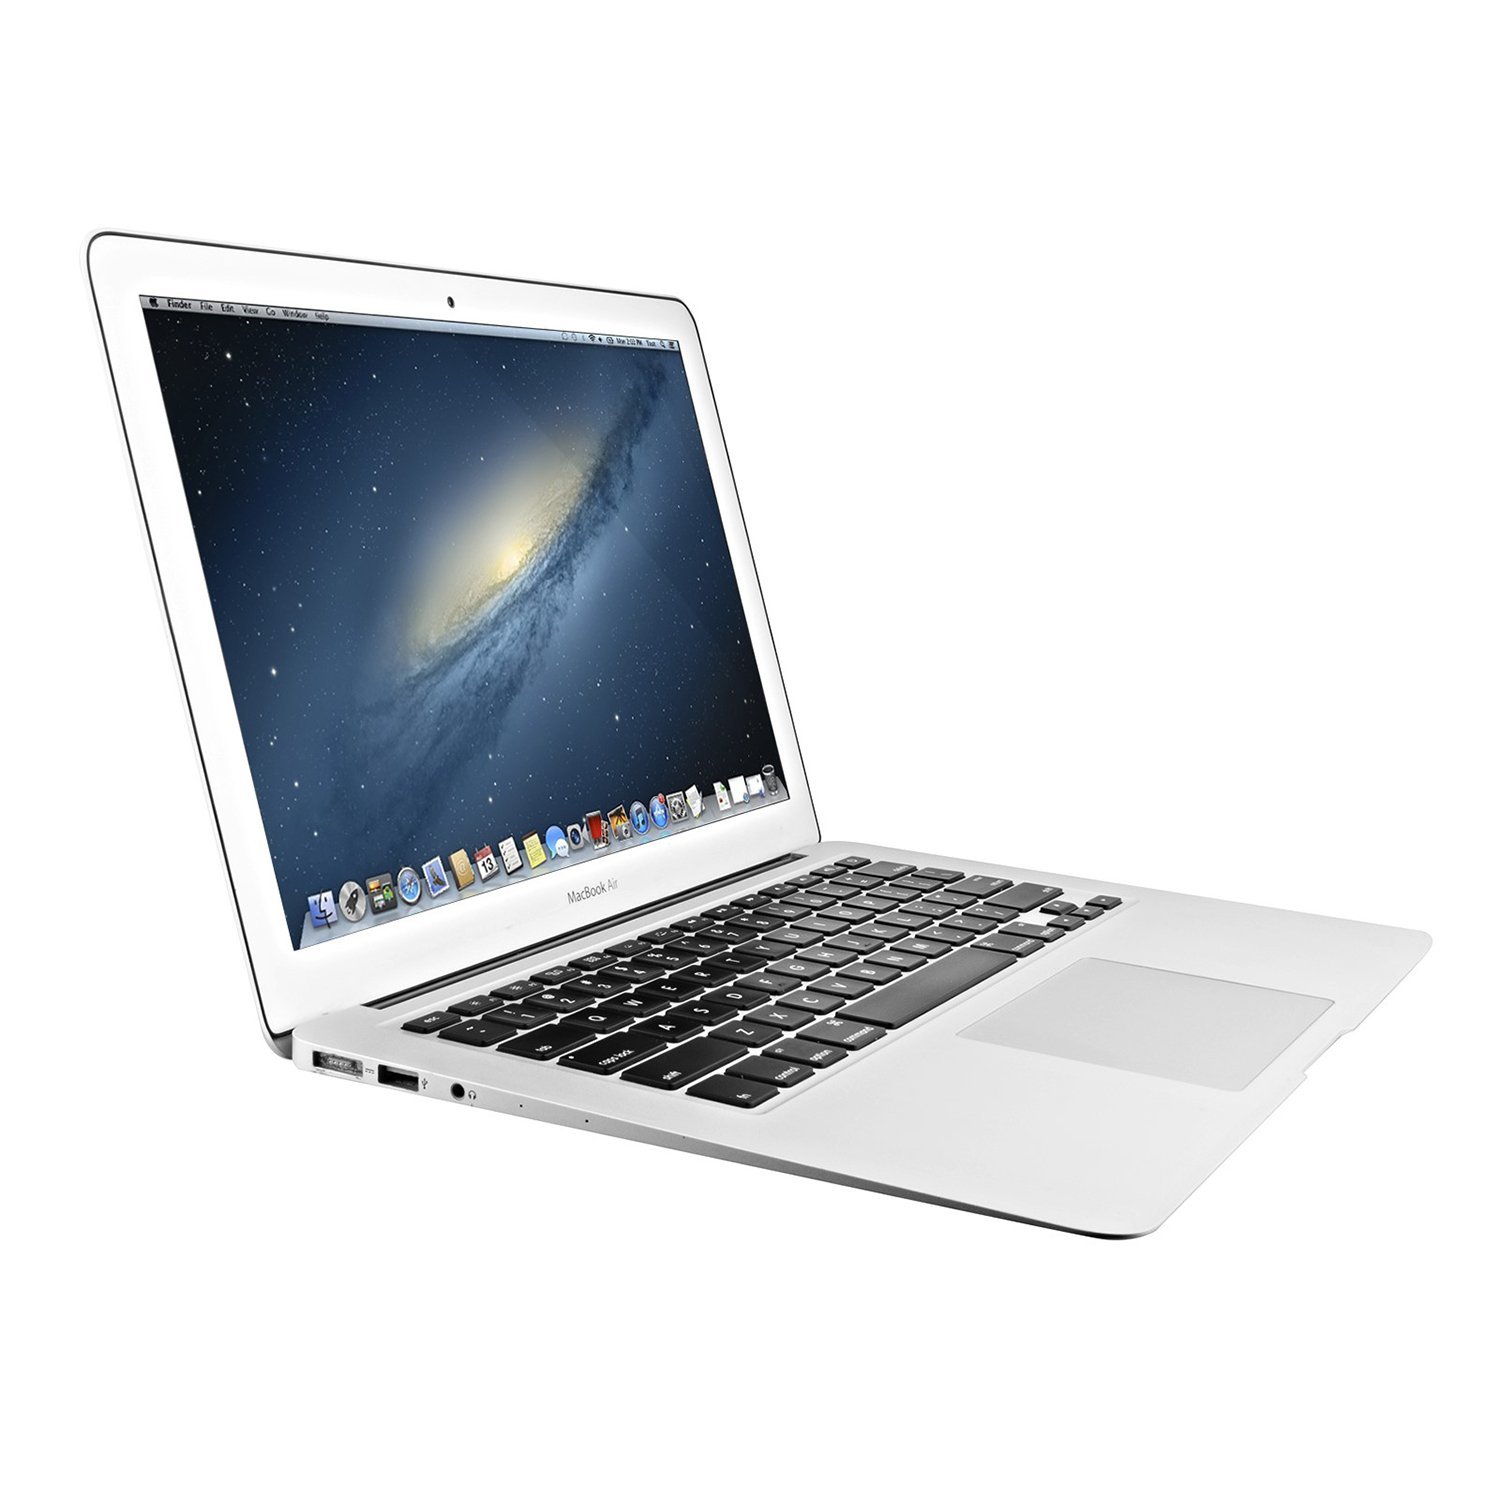 Restored Apple MacBook Air Laptop 13.3", Intel Core i5-4260U, 4GB RAM, 128GB SSD, Mac OS, Silver, MD760LL/B (Refurbished) - image 2 of 2